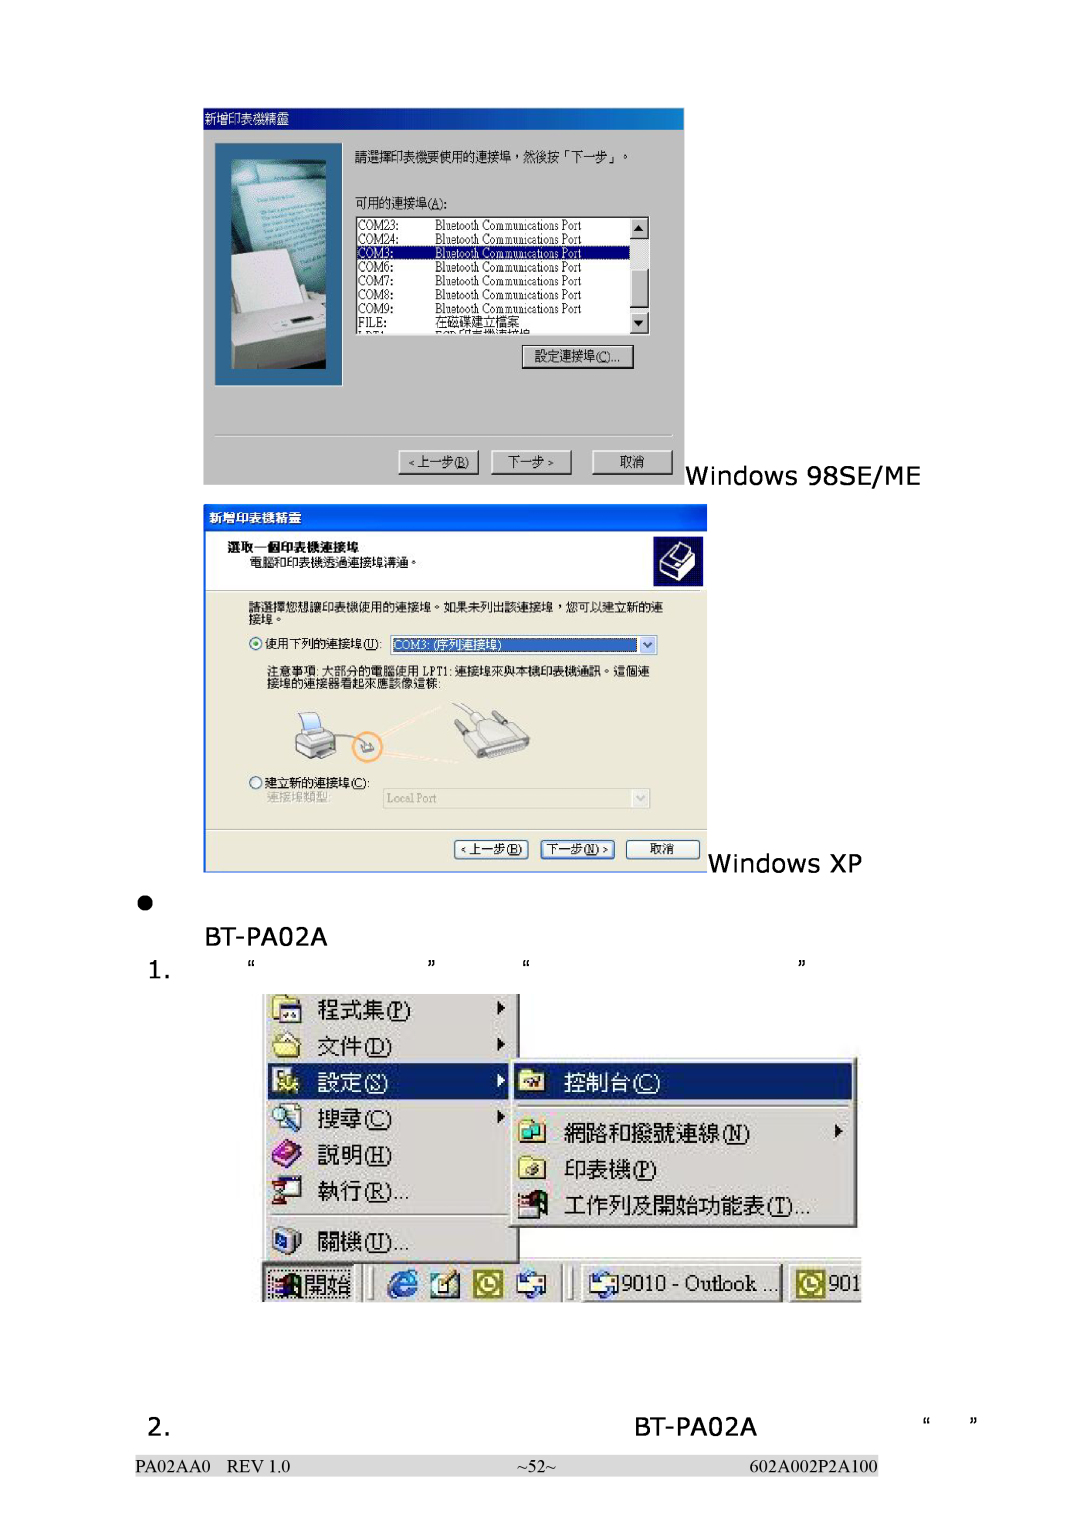 EPoX Computer manual Windows 98SE/ME Windows XP, 1. “”“” 2. BT-PA02A “”, PA02AA0 REV, ~52~, 602A002P2A100 